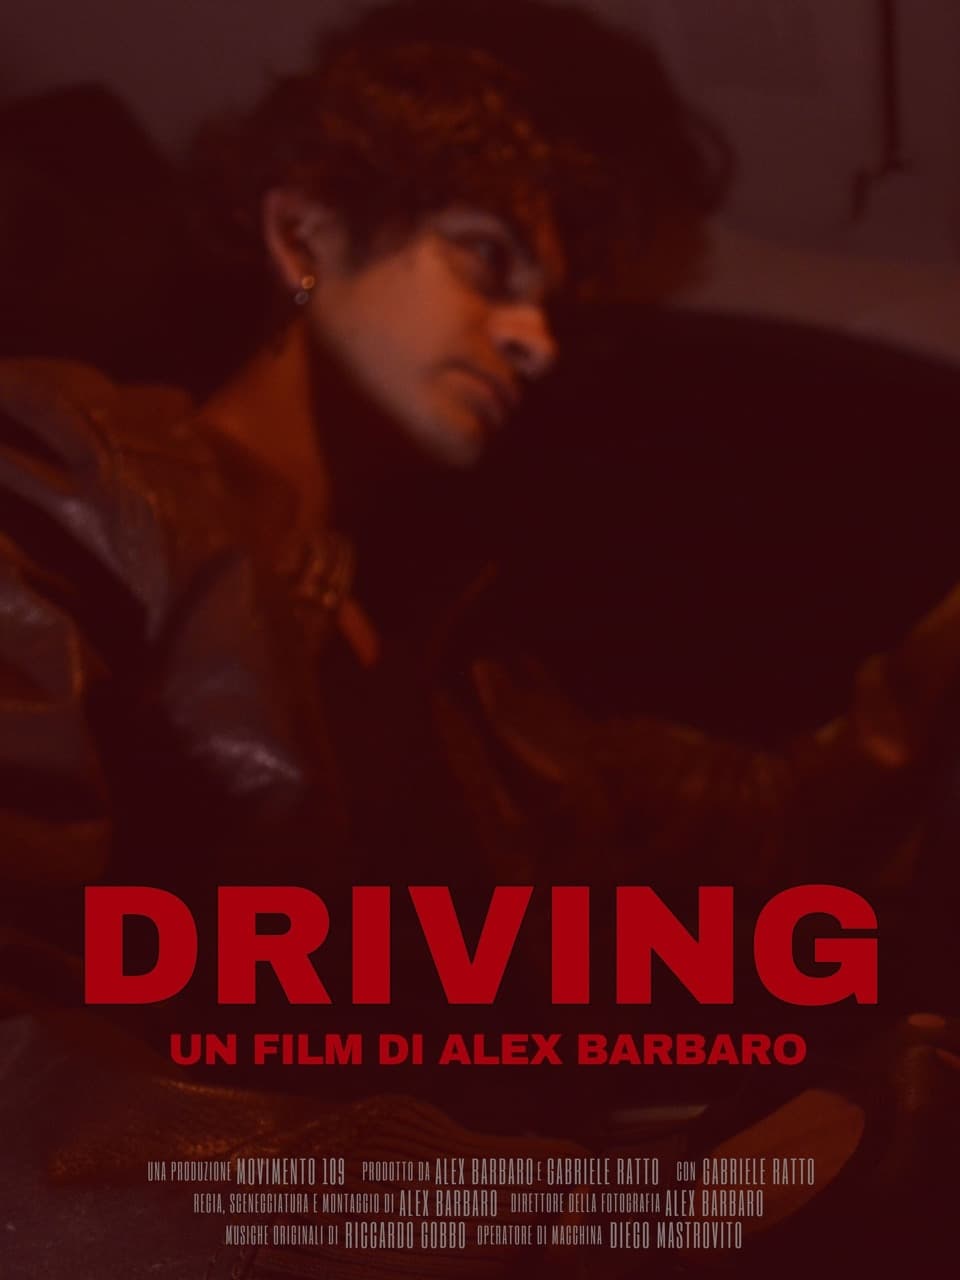 DRIVING